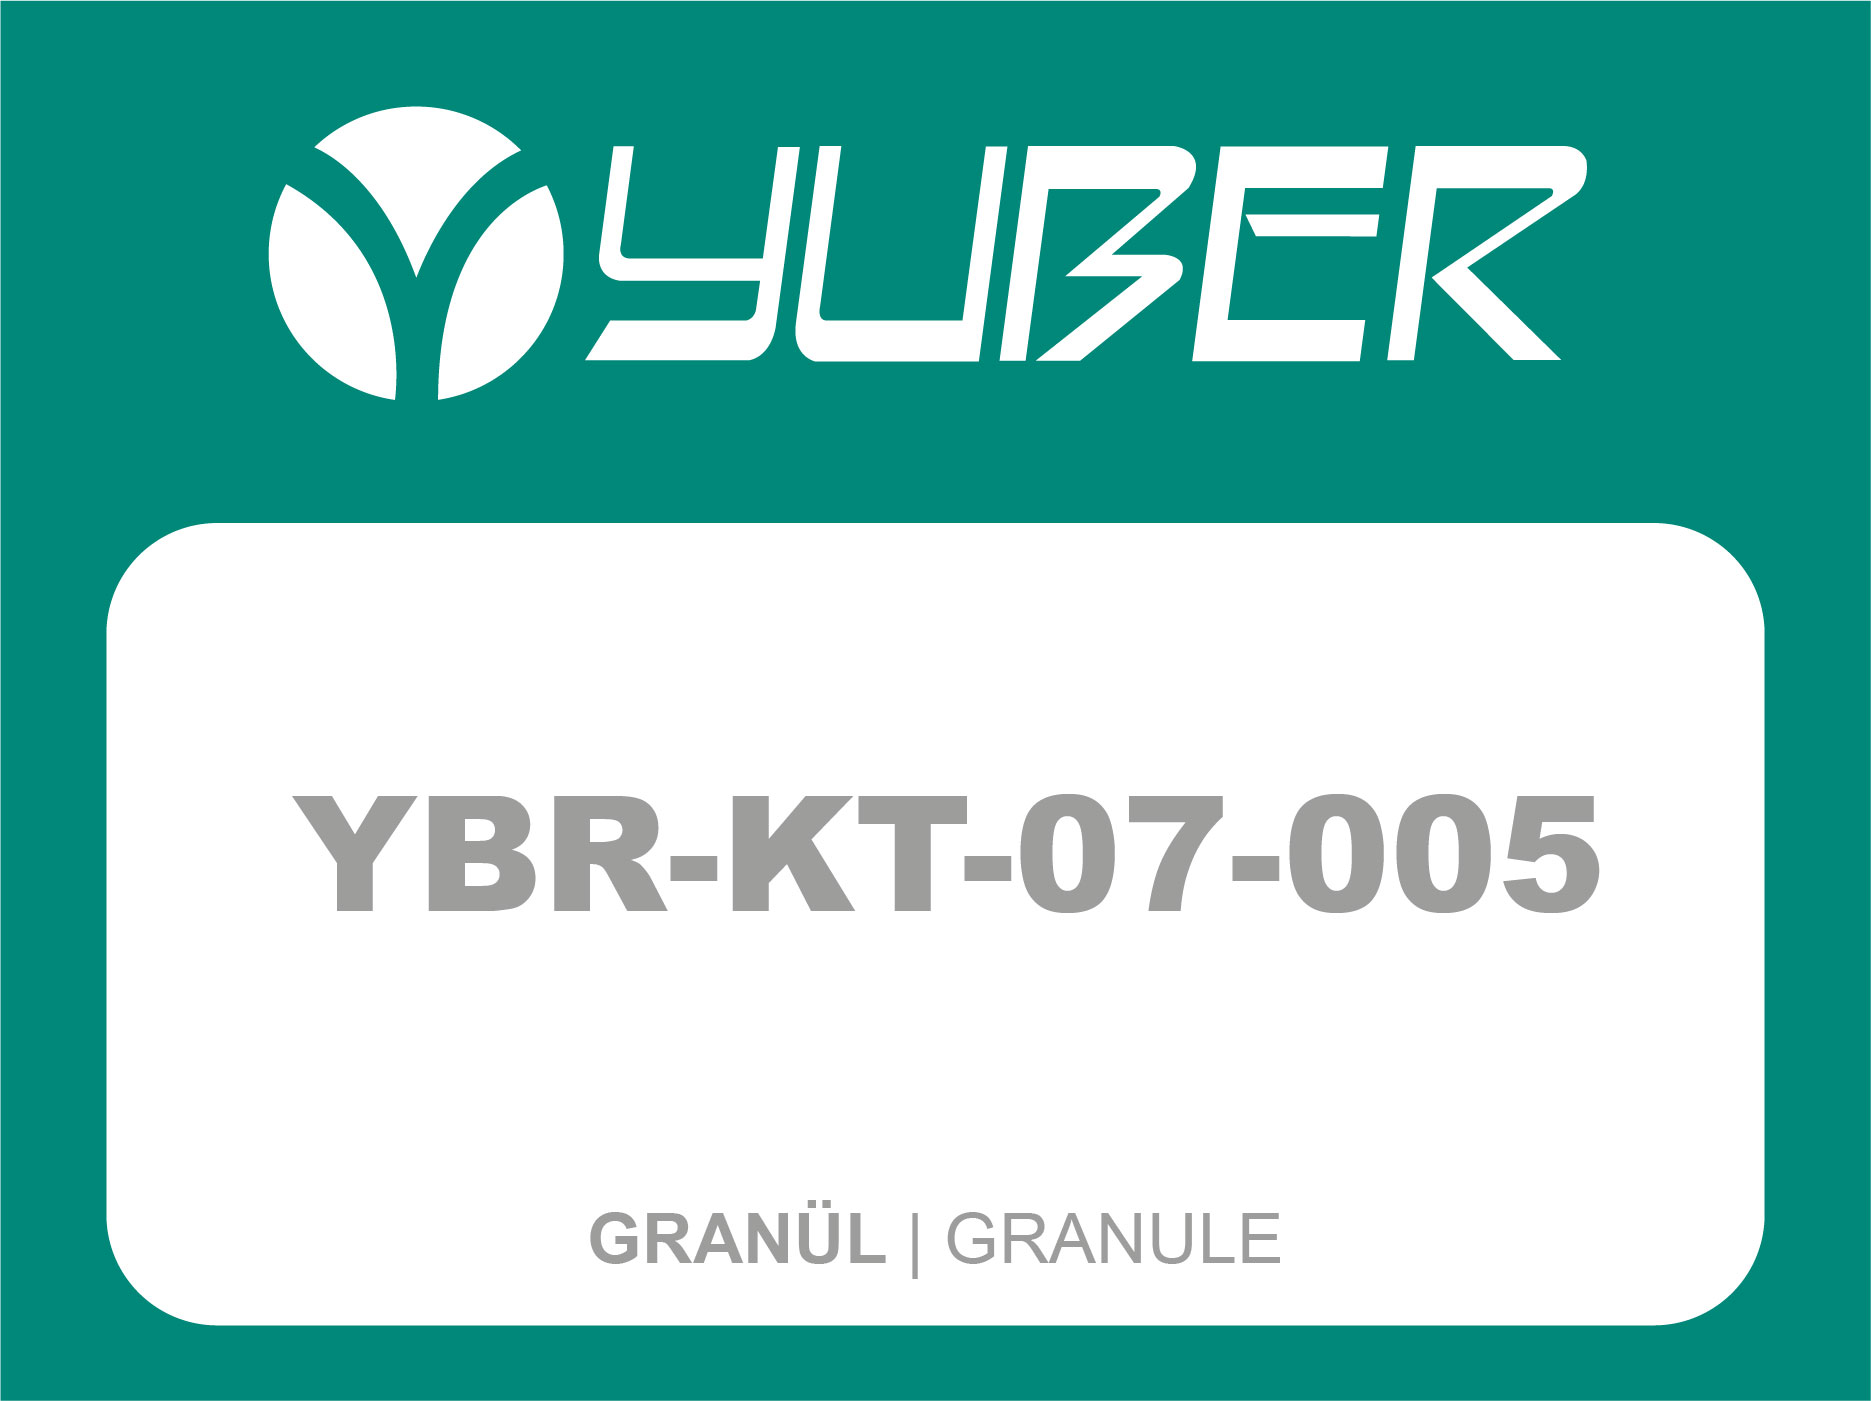 YBR KT 07 005 Granule Yuber Metallurgy